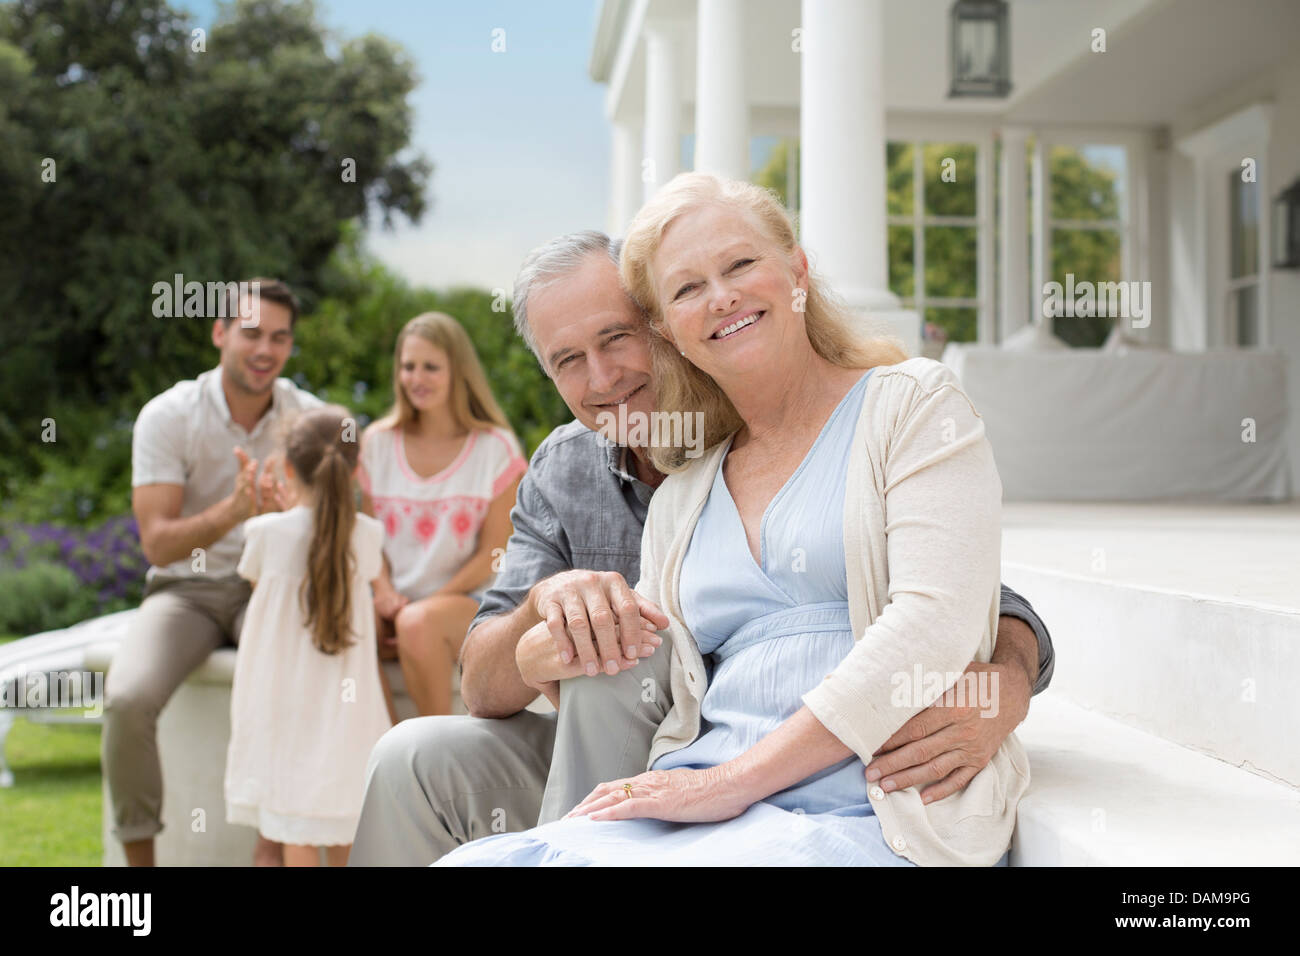 Older couple smiling on porch Banque D'Images